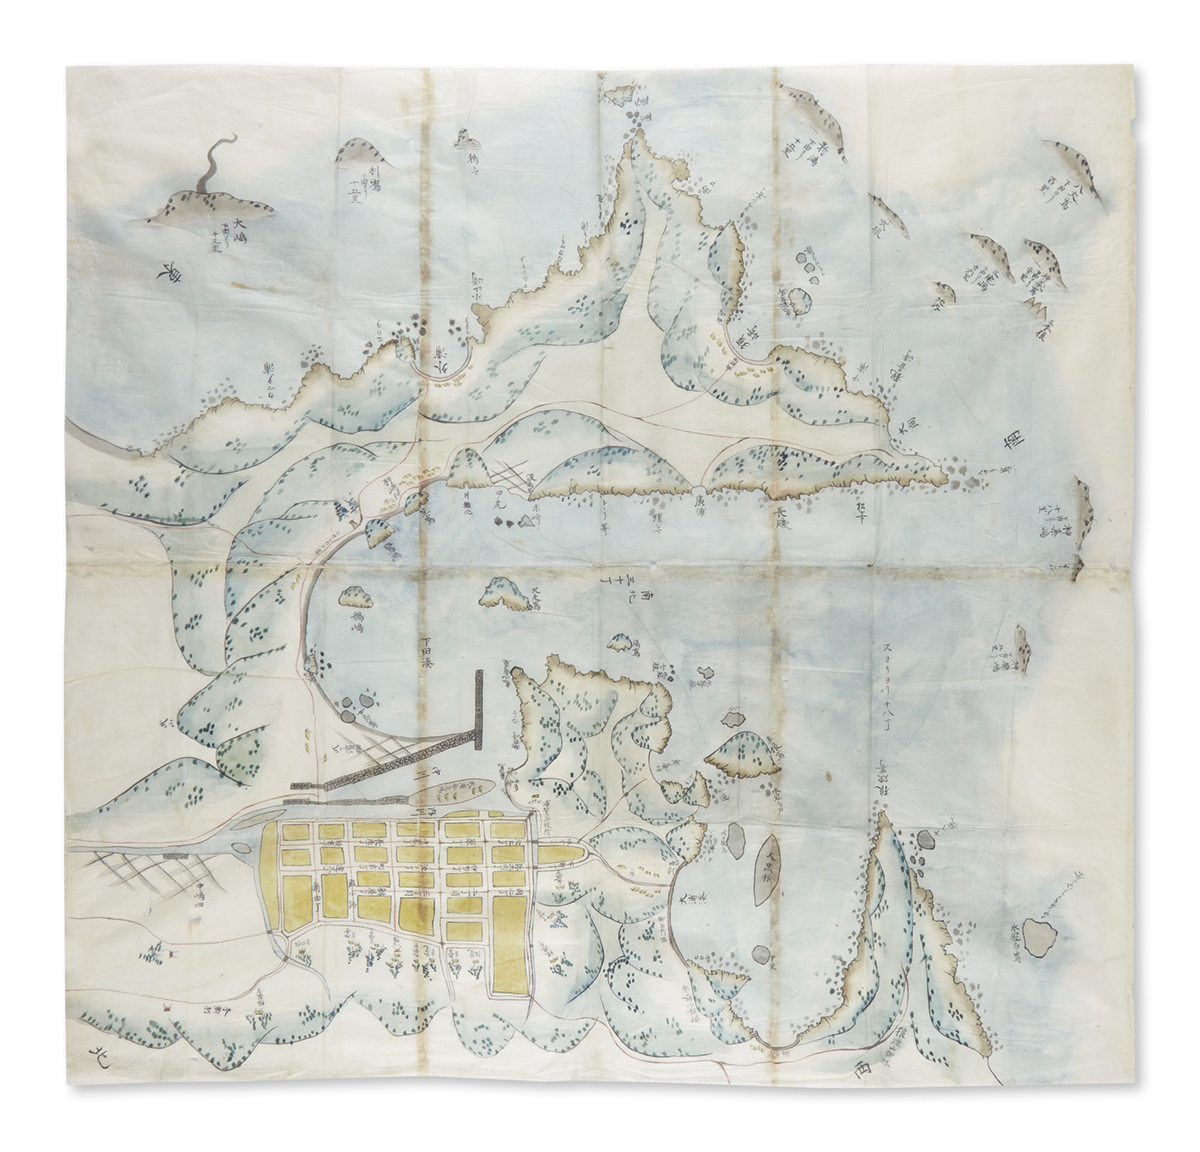 (JAPAN.) Large folding manuscript map of Shimoda.